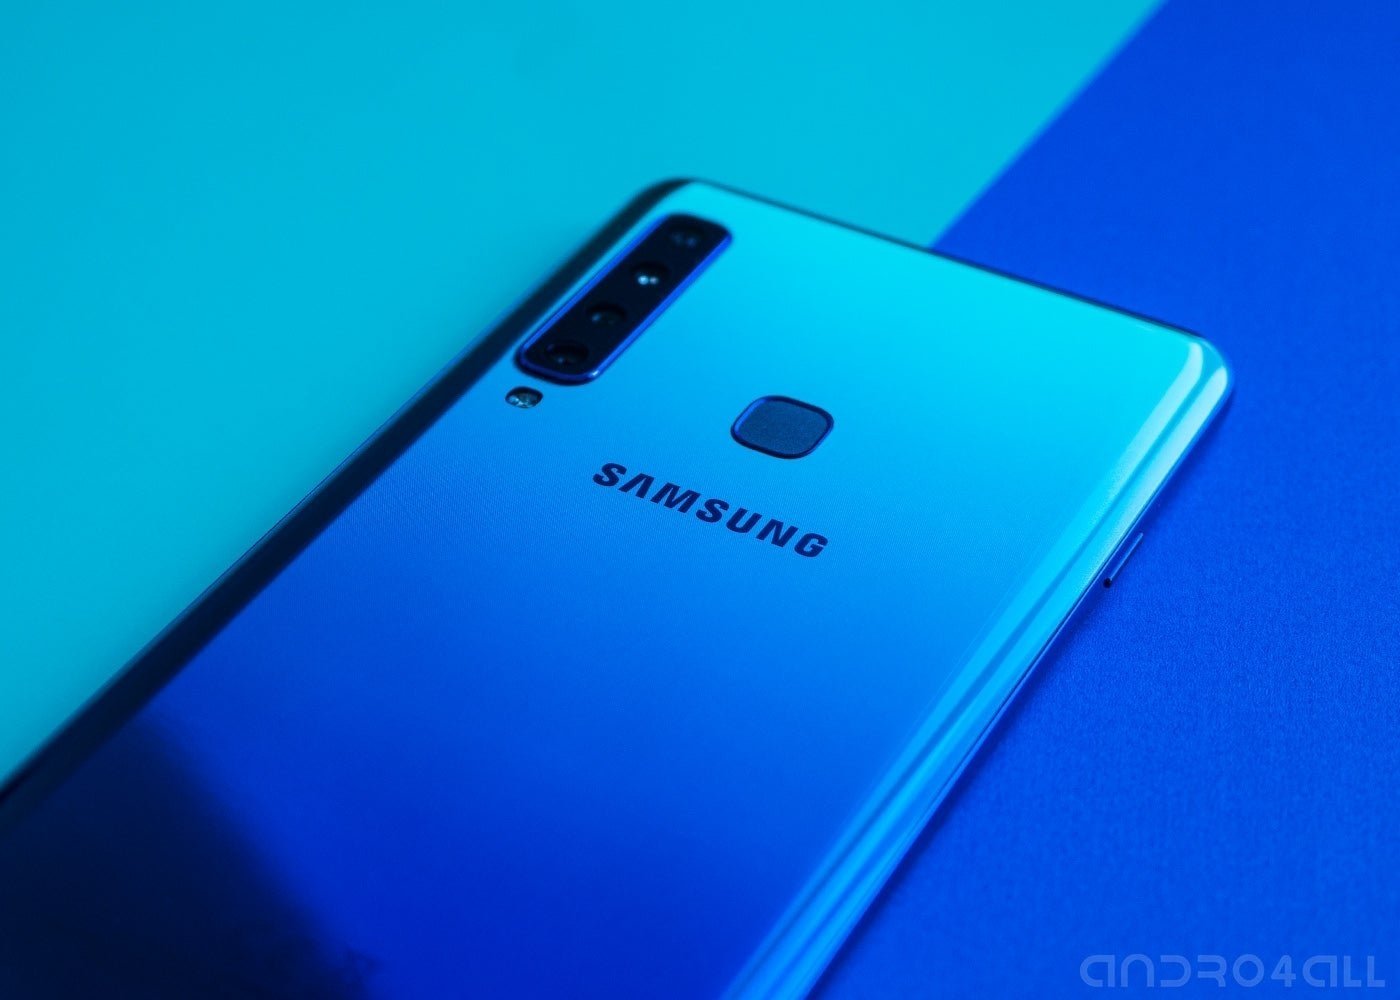 Samsung Galaxy A9 2018, parte trasera color azull